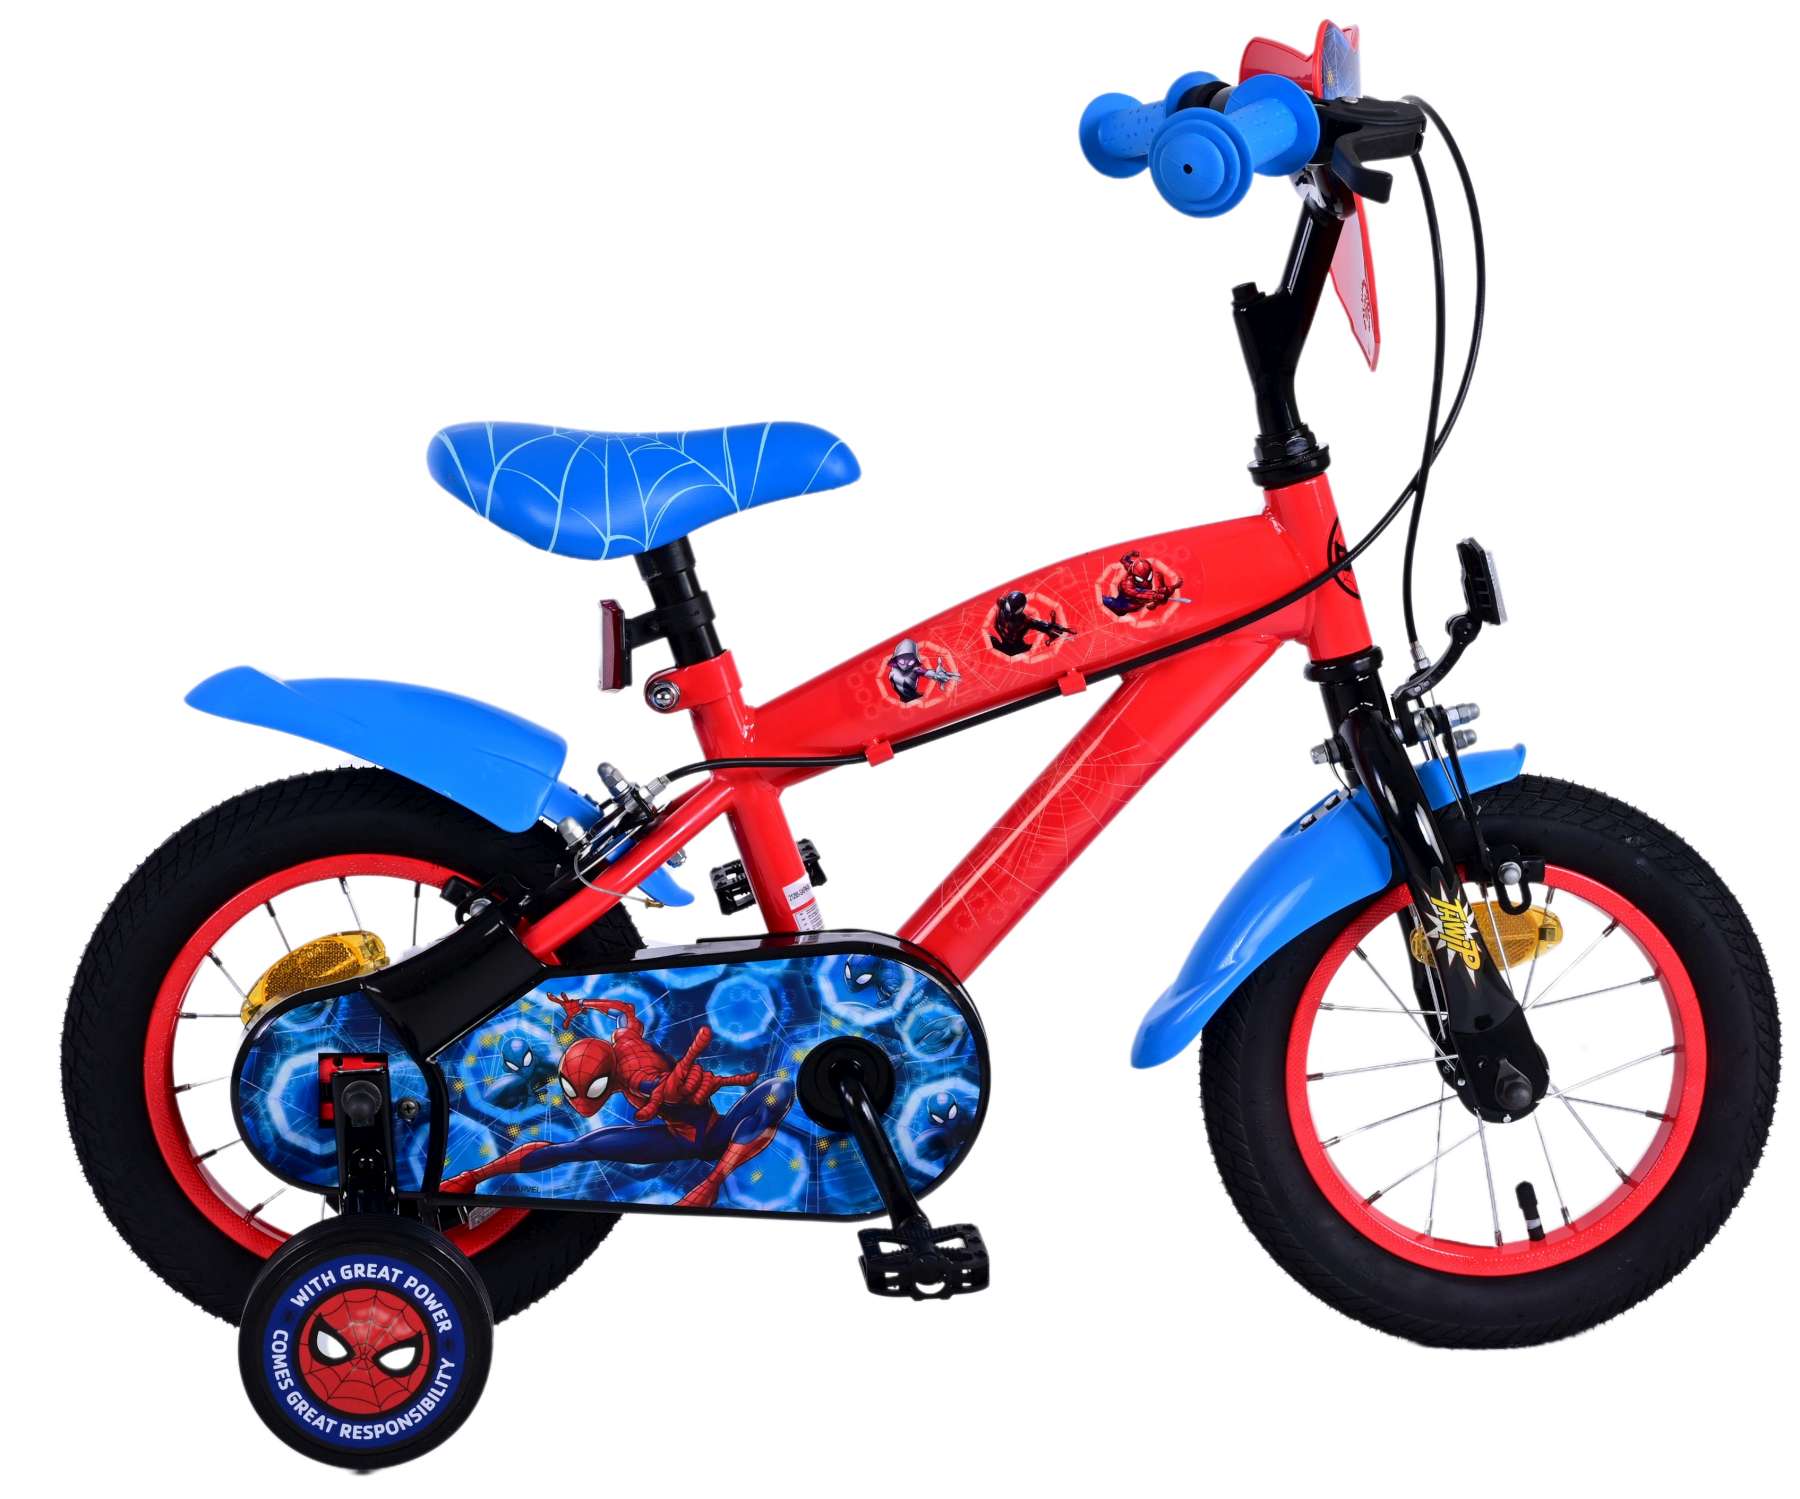 Casque vélo Marvel Spider-Man 51-55cm - bleu/rouge